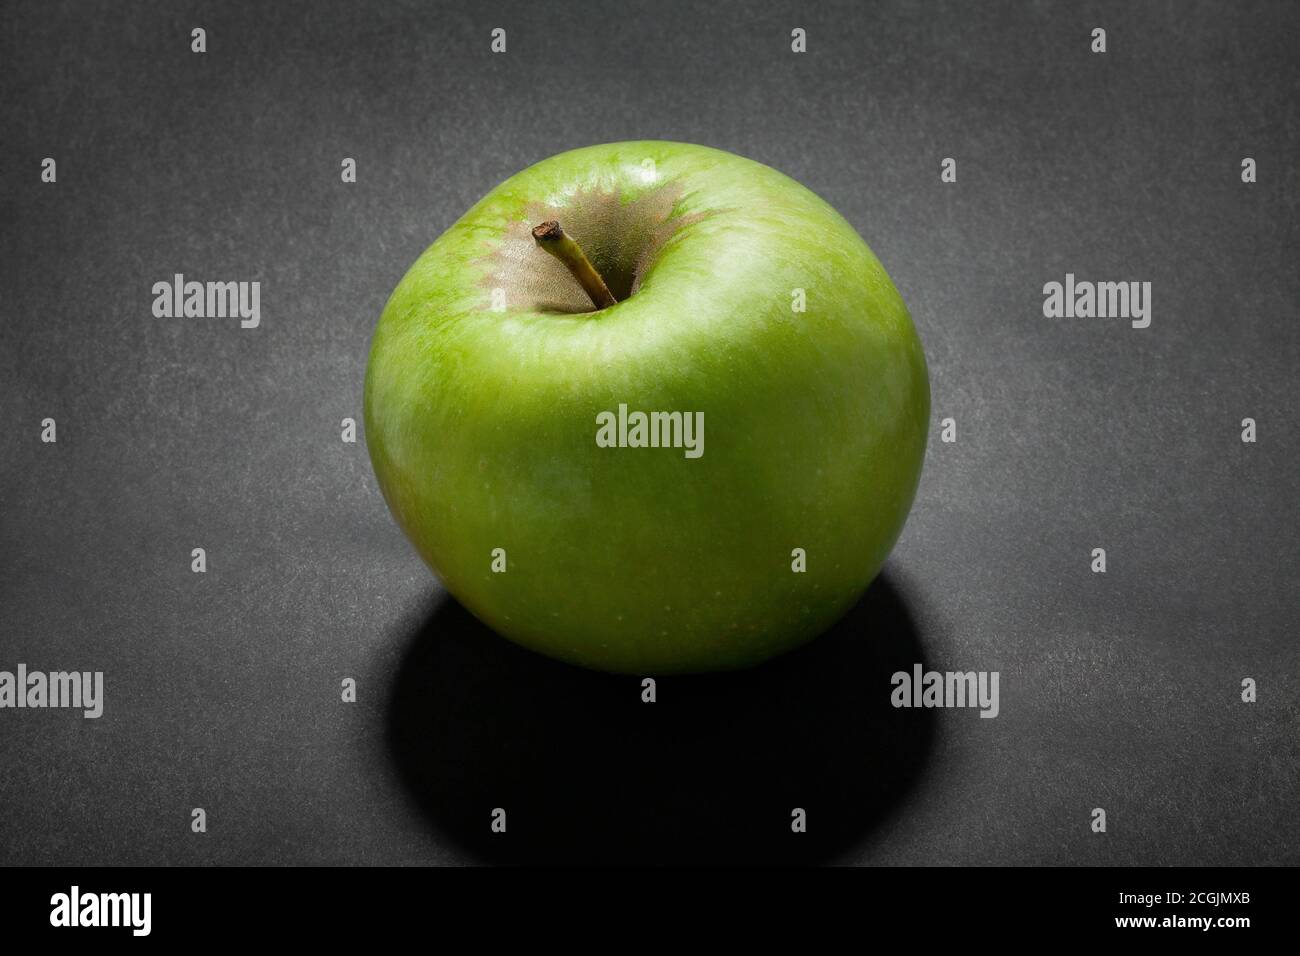 granny smith apple on black background Stock Photo